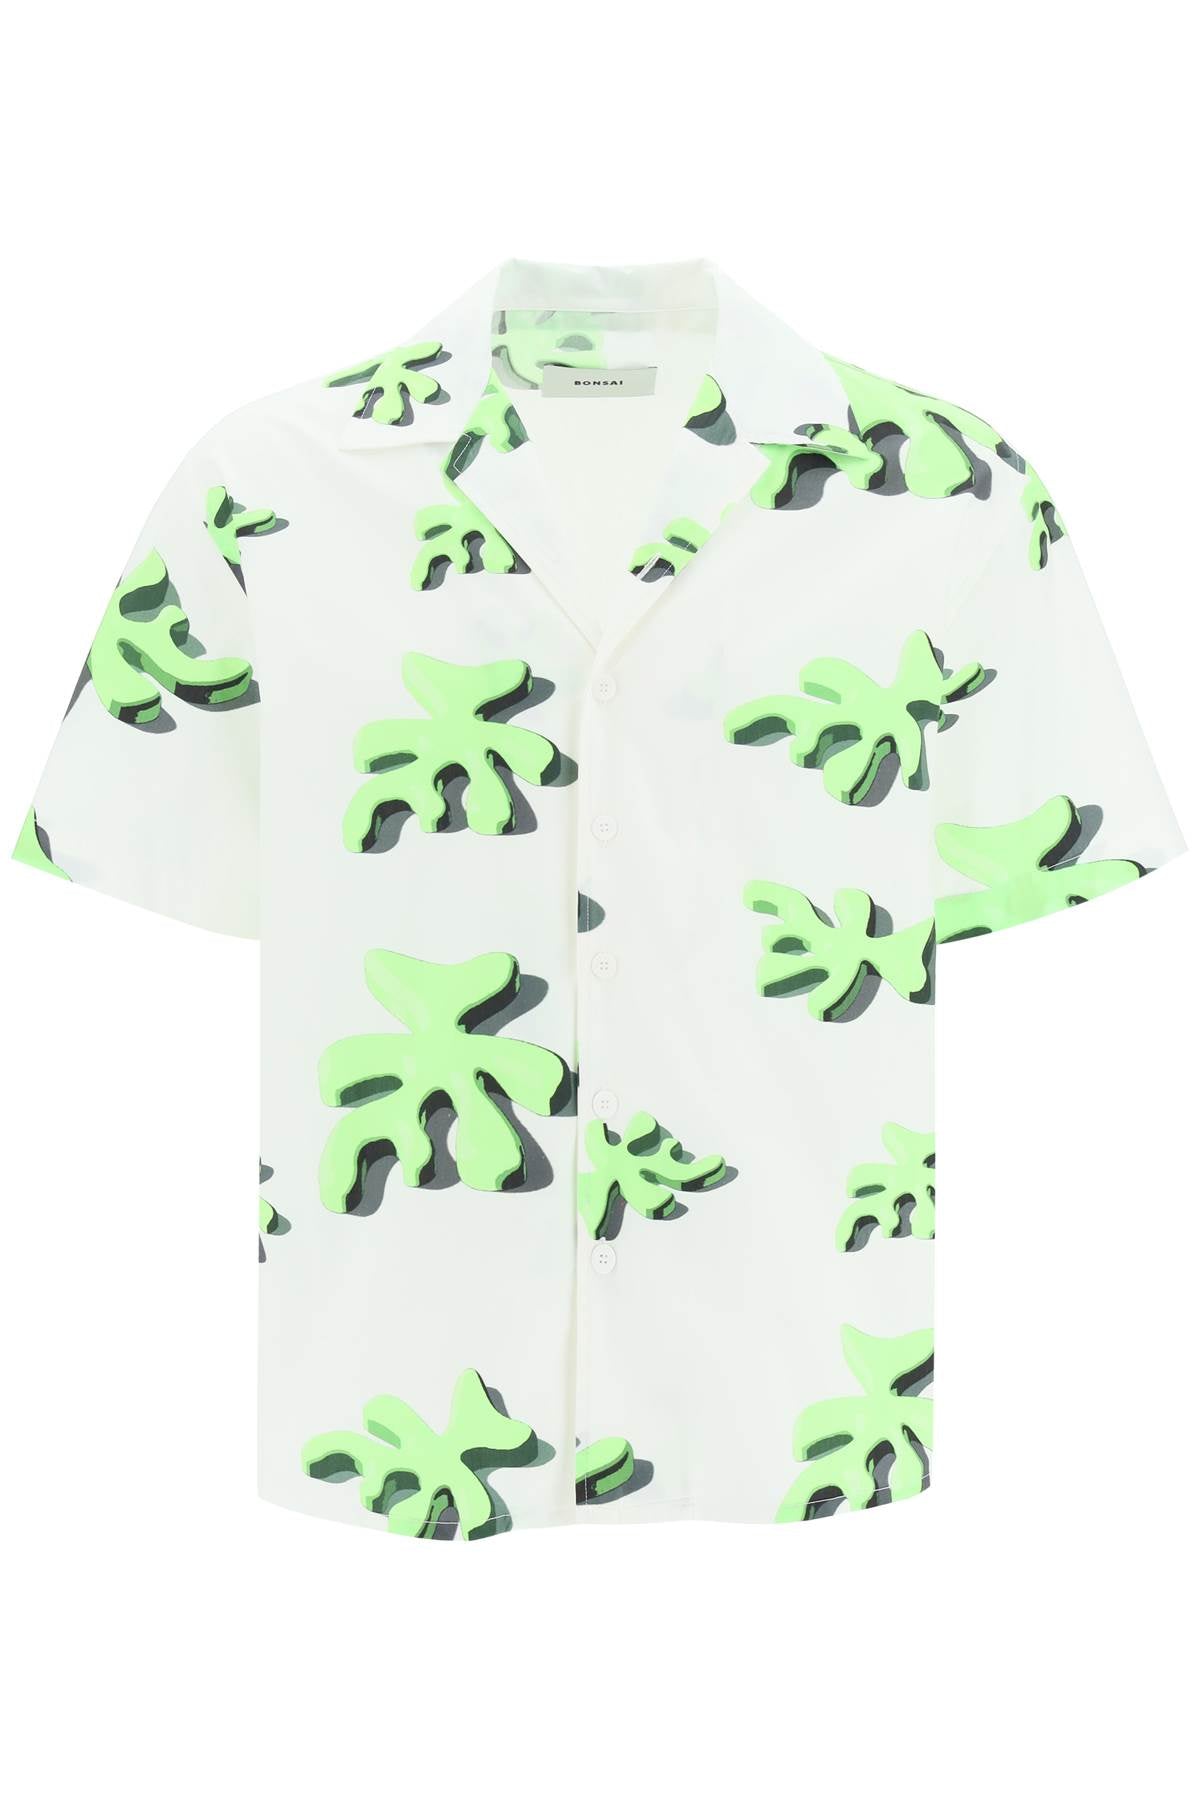 Bonsai alberello bowling shirt-0